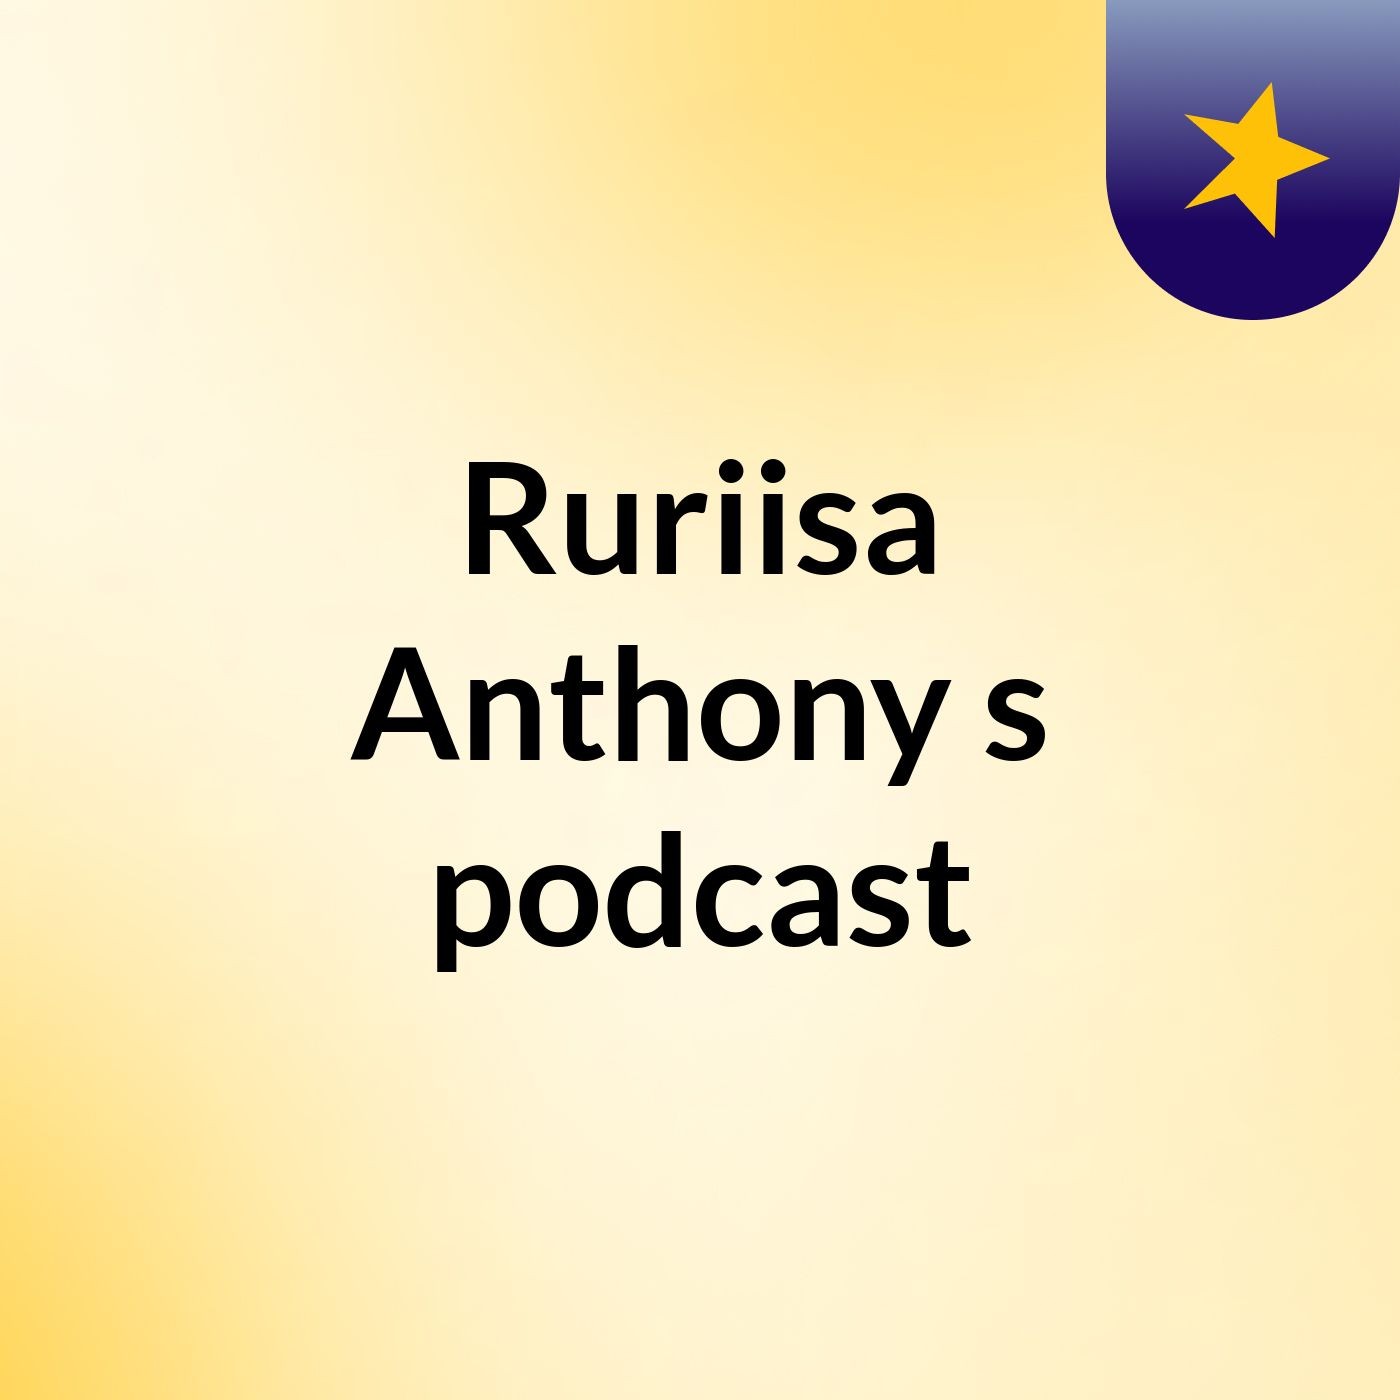 Ruriisa Anthony's podcast